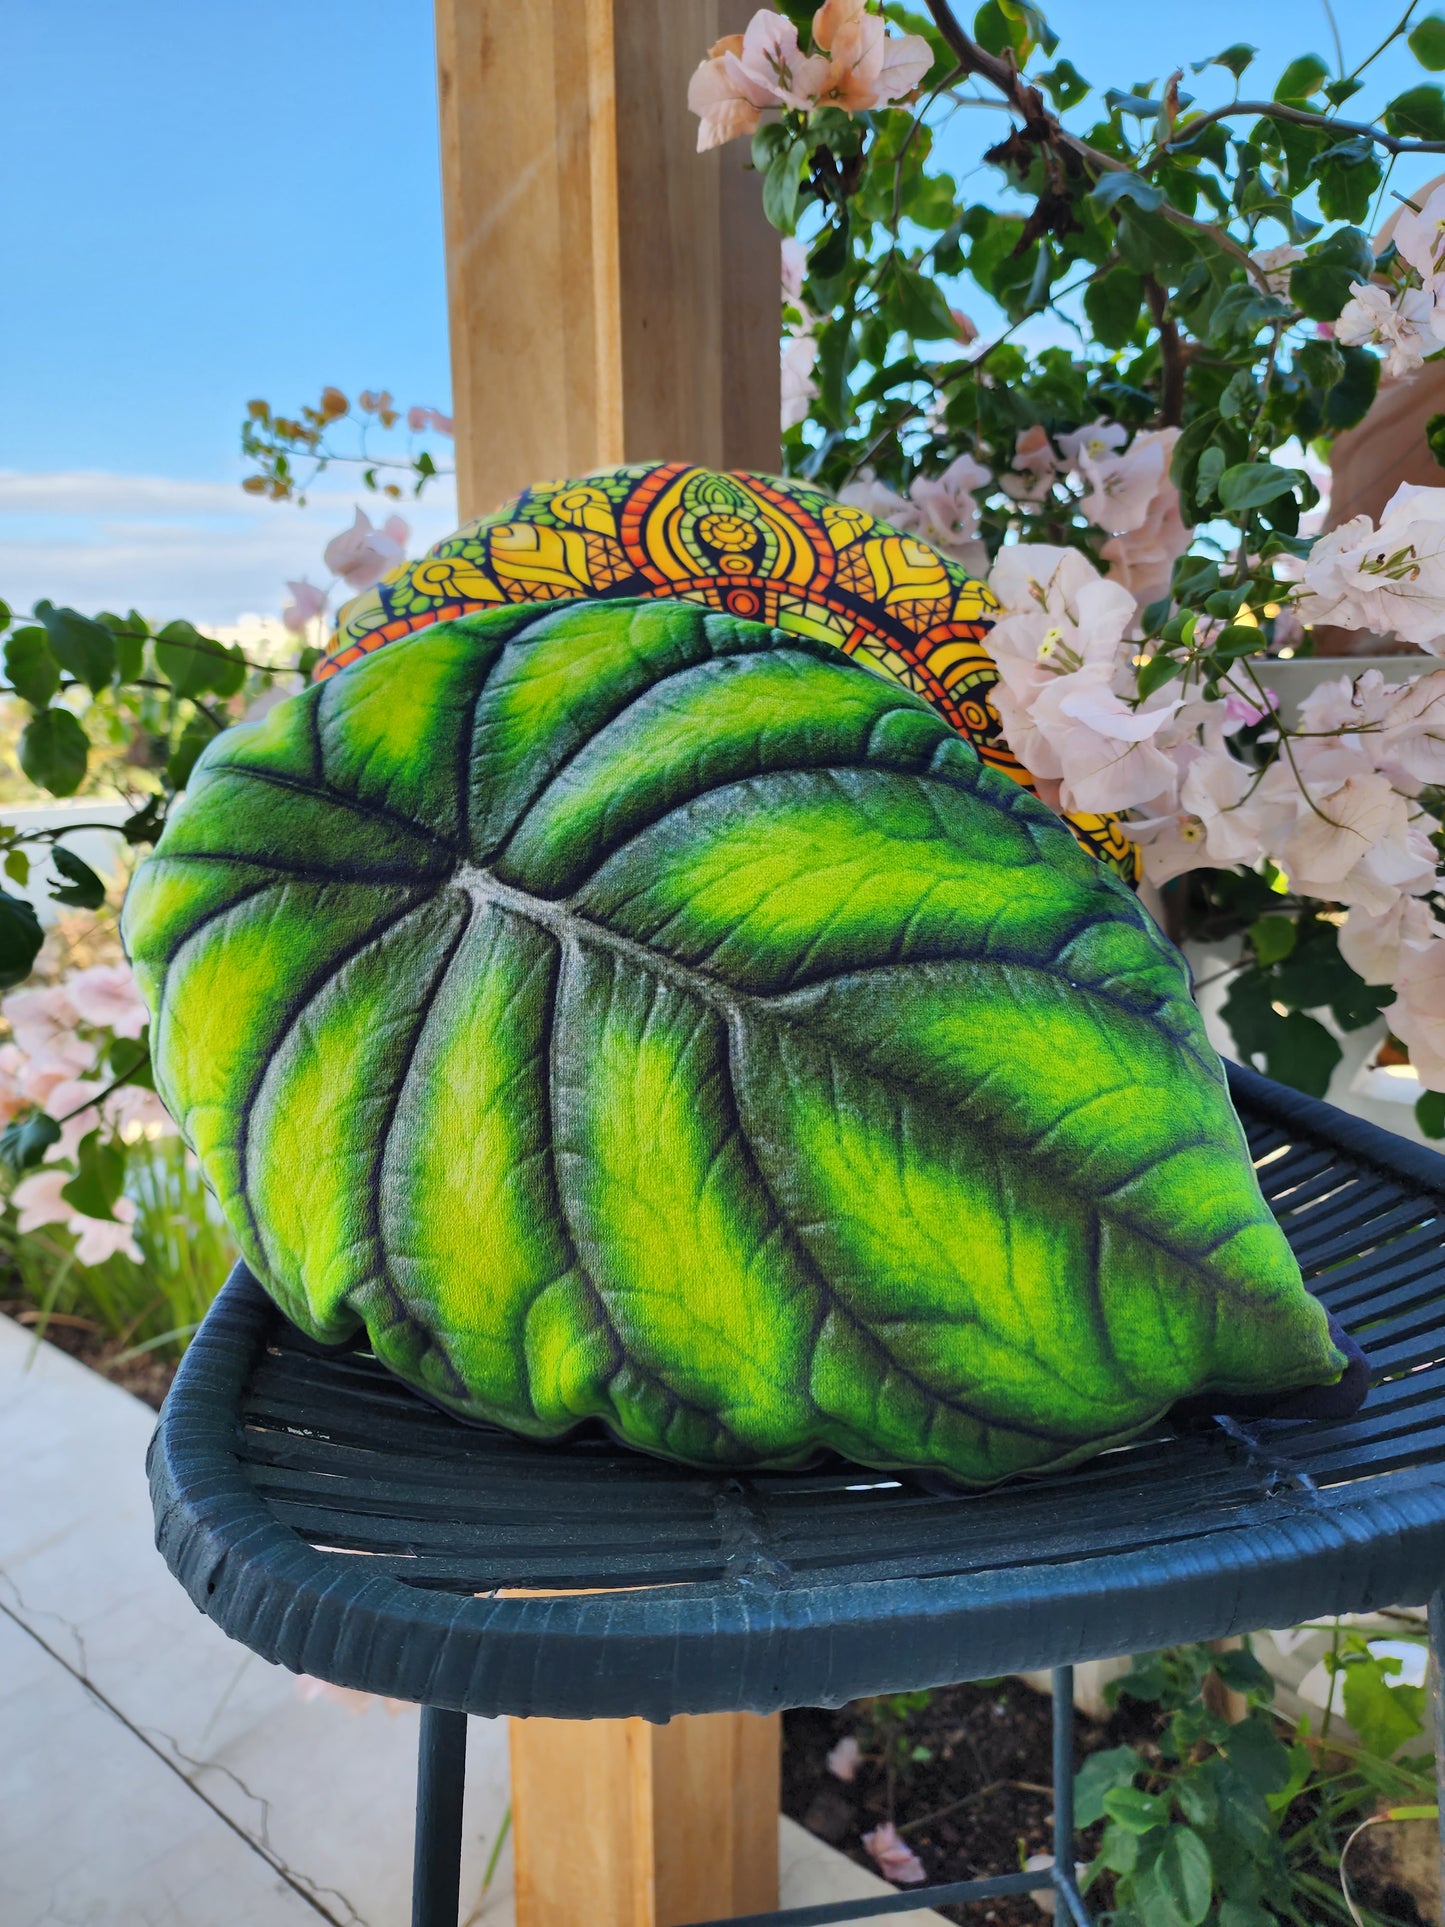 Alocasia Dragon Scale Velvet Leaf Pillow